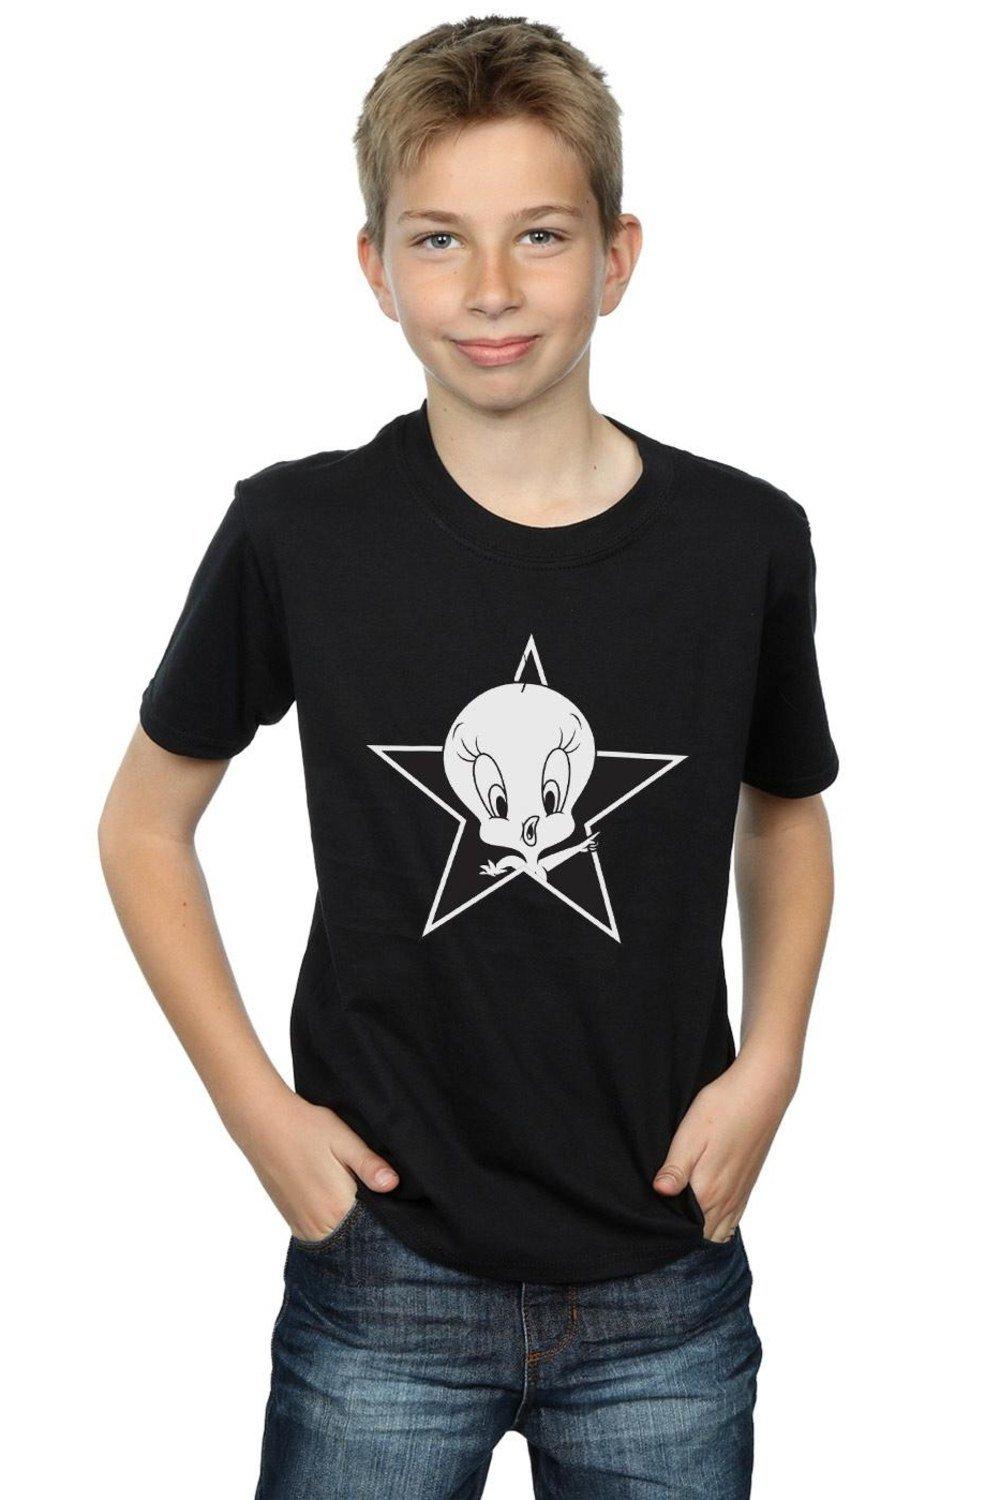 Tweety Pie Mono Star T-Shirt